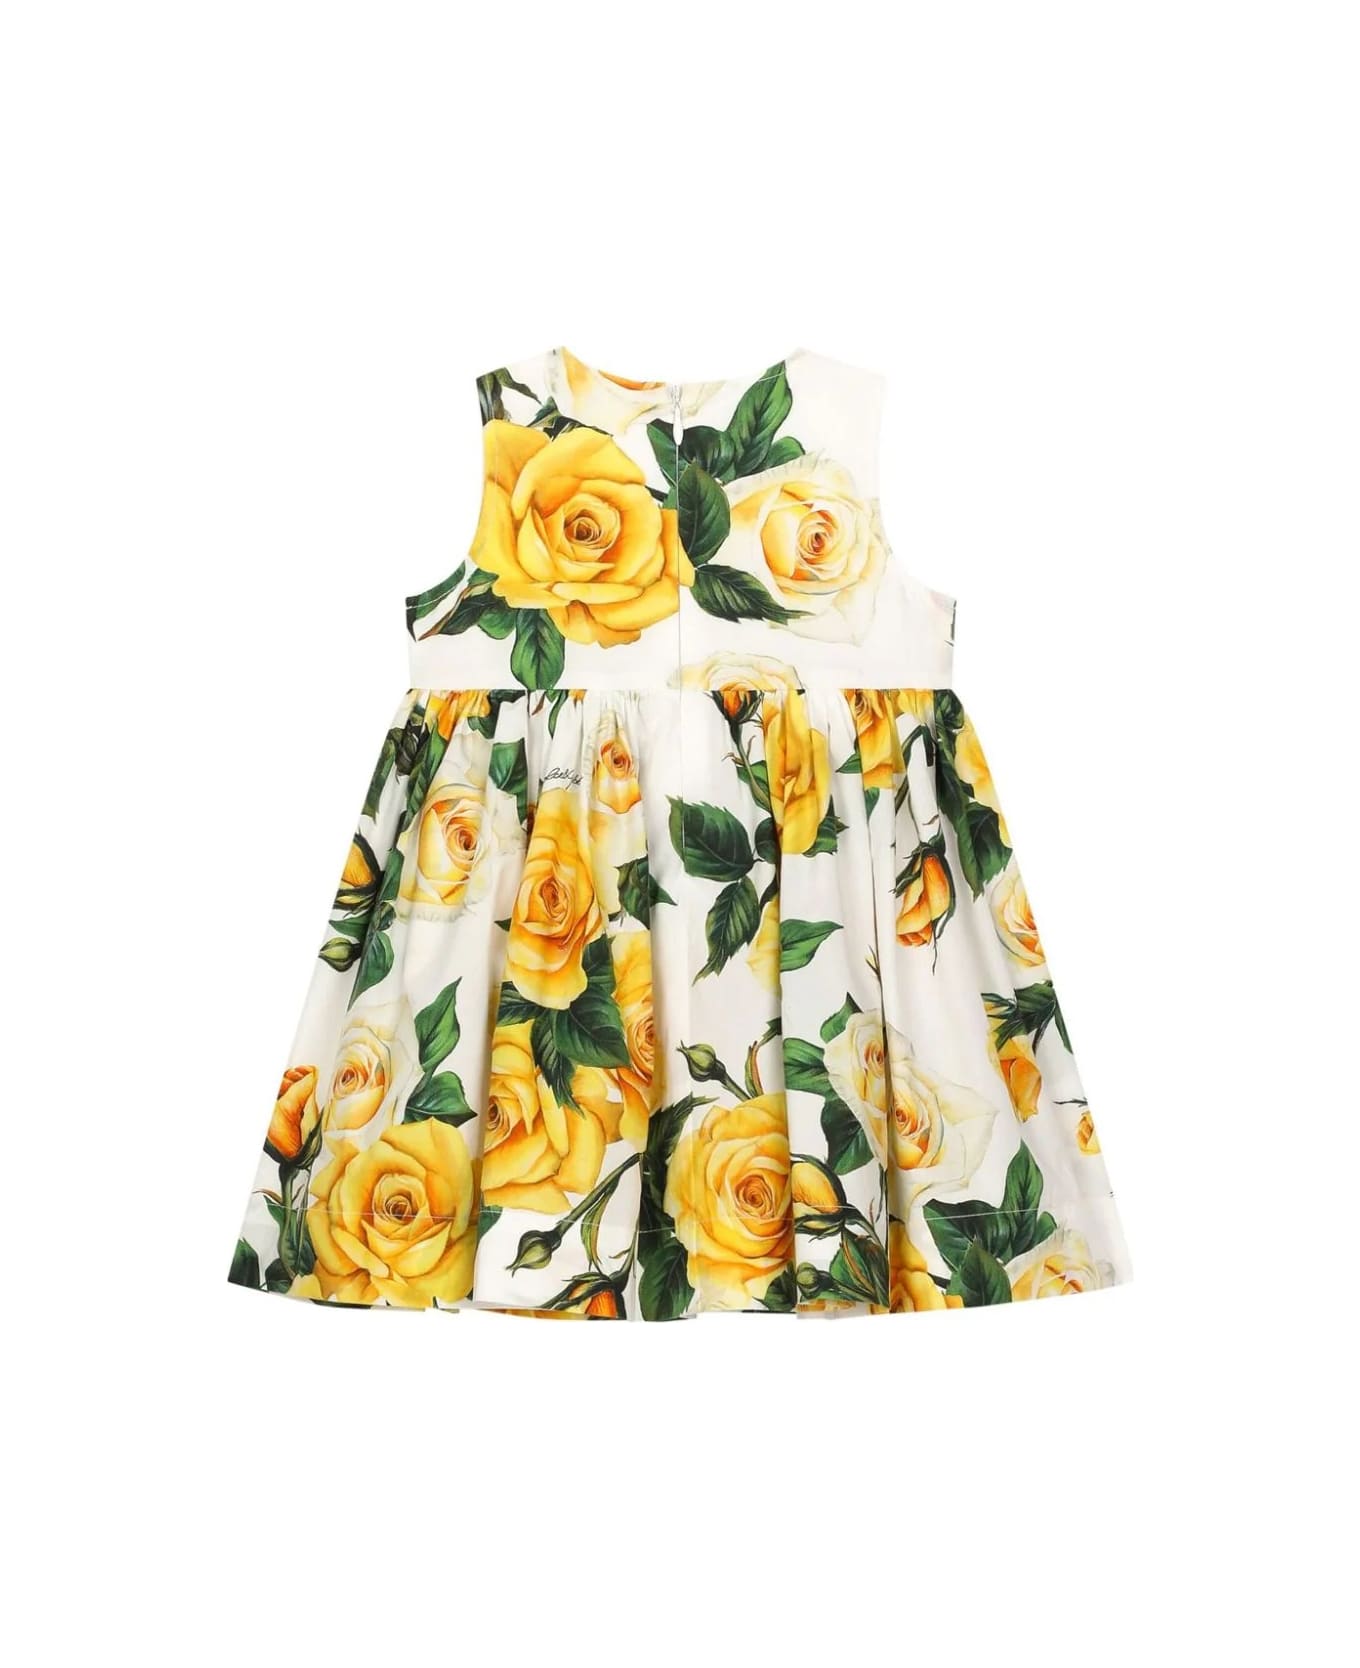 Dolce & Gabbana Yellow Rose Print Poplin Dress With Culottes - Yellow